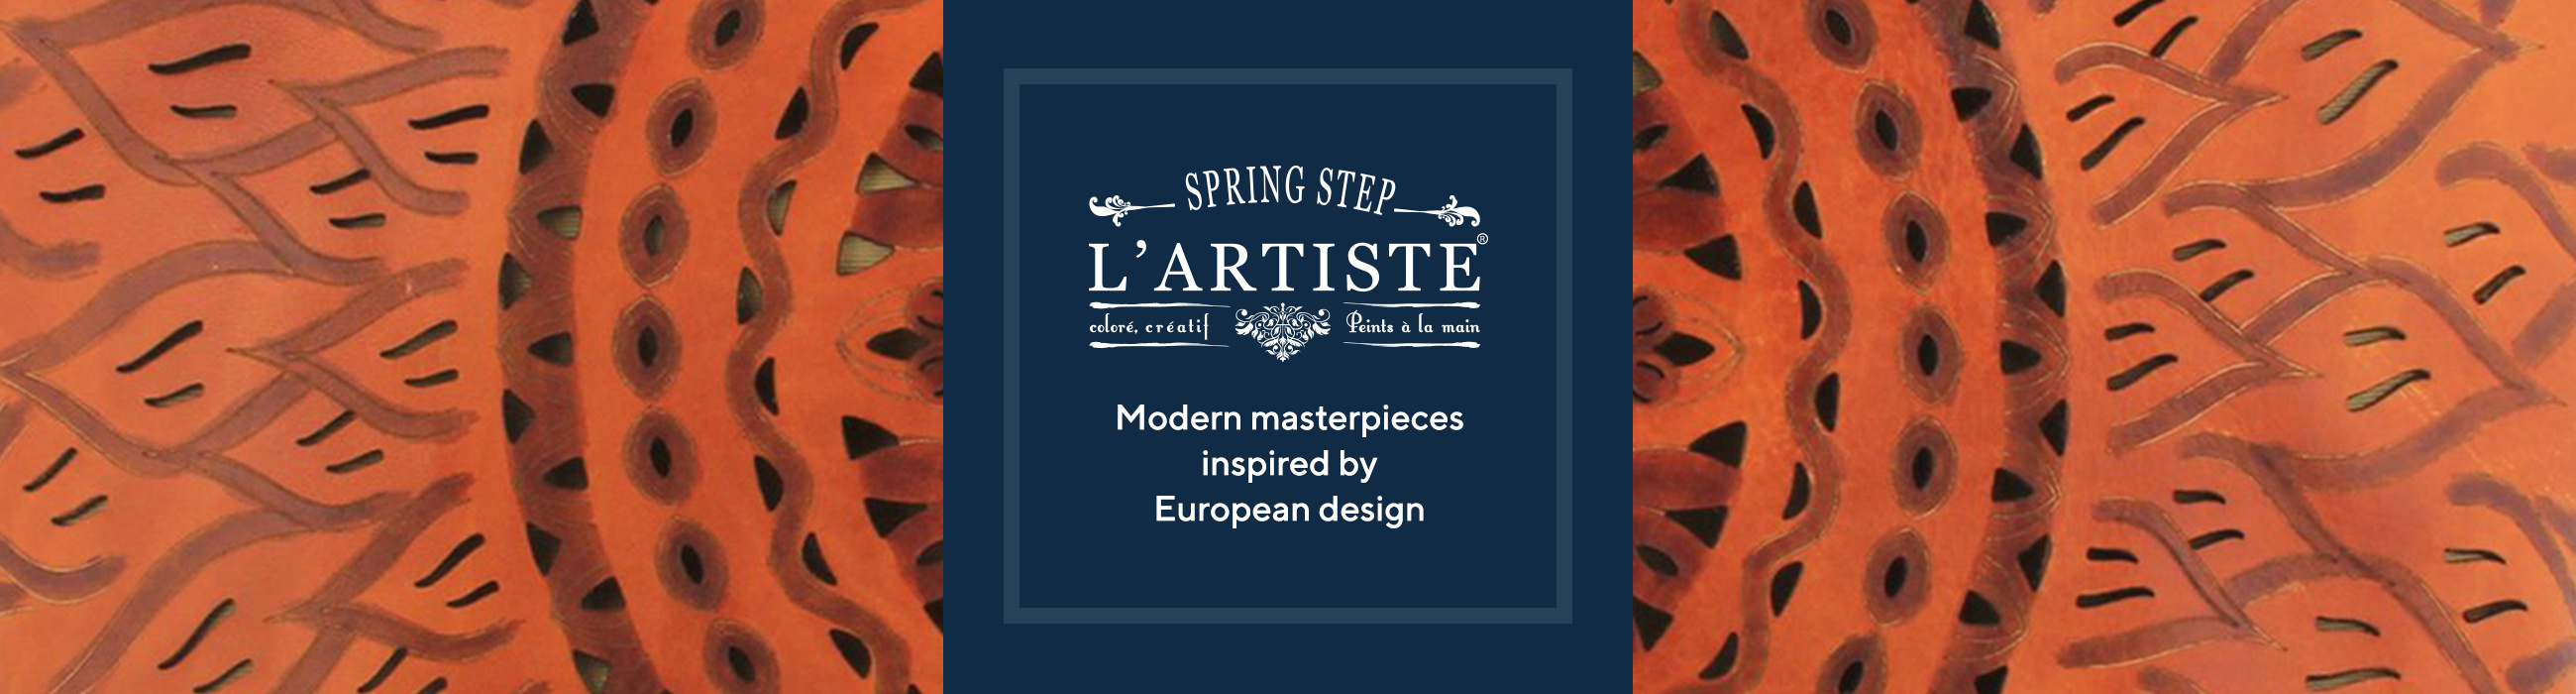 Spring Step L'Artiste -- Modern masterpieces inspired by European design